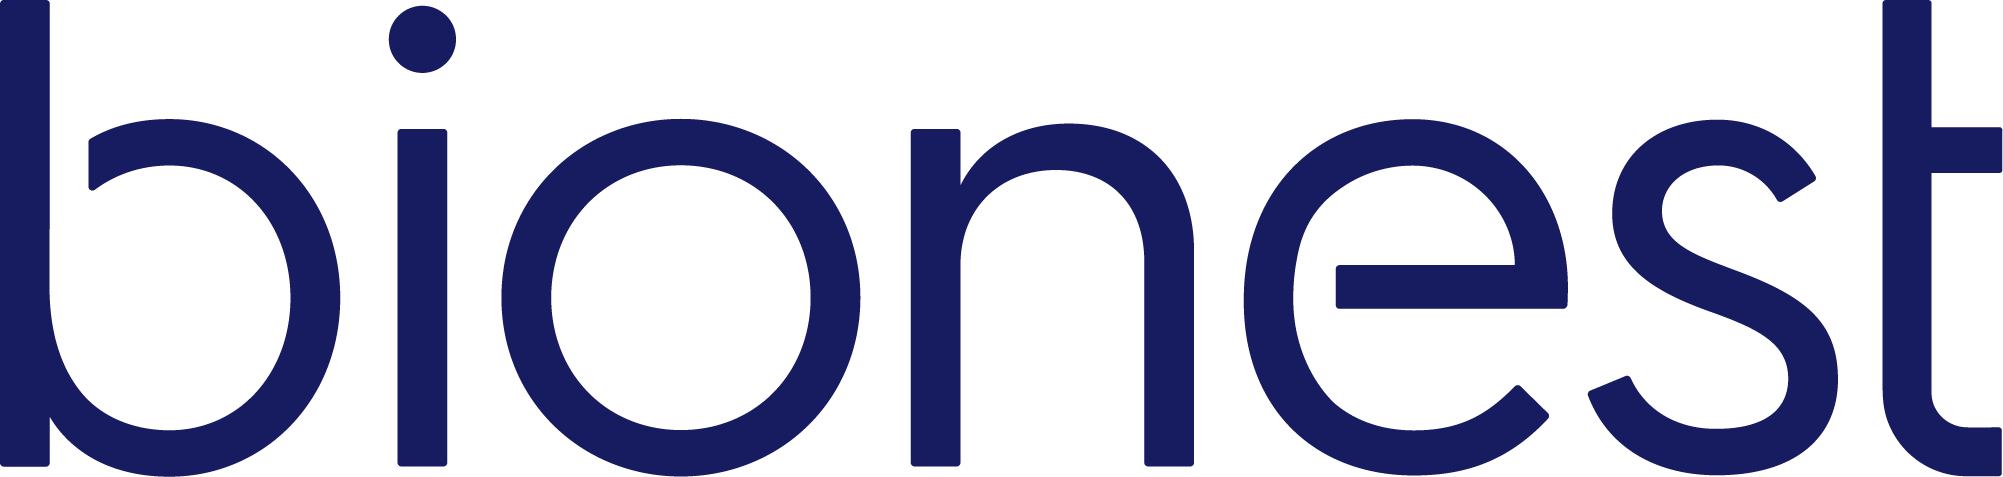 Bionest_wordmark_Logo_RGB.png